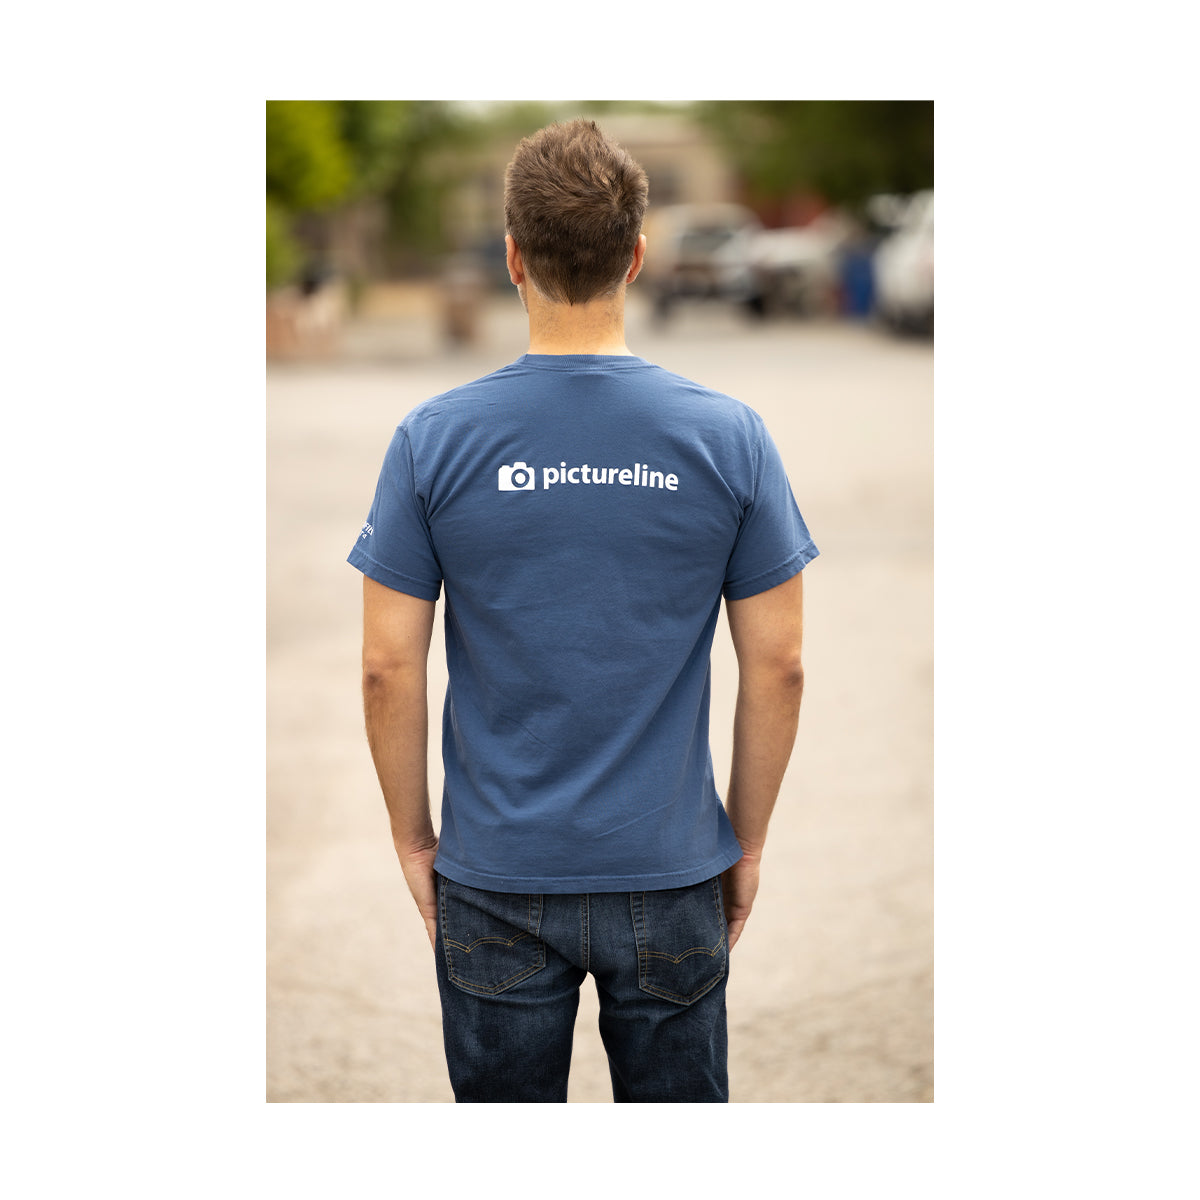 pictureline Apparel: Spring 2020 Short Sleeve Shirt Medium (Blue)